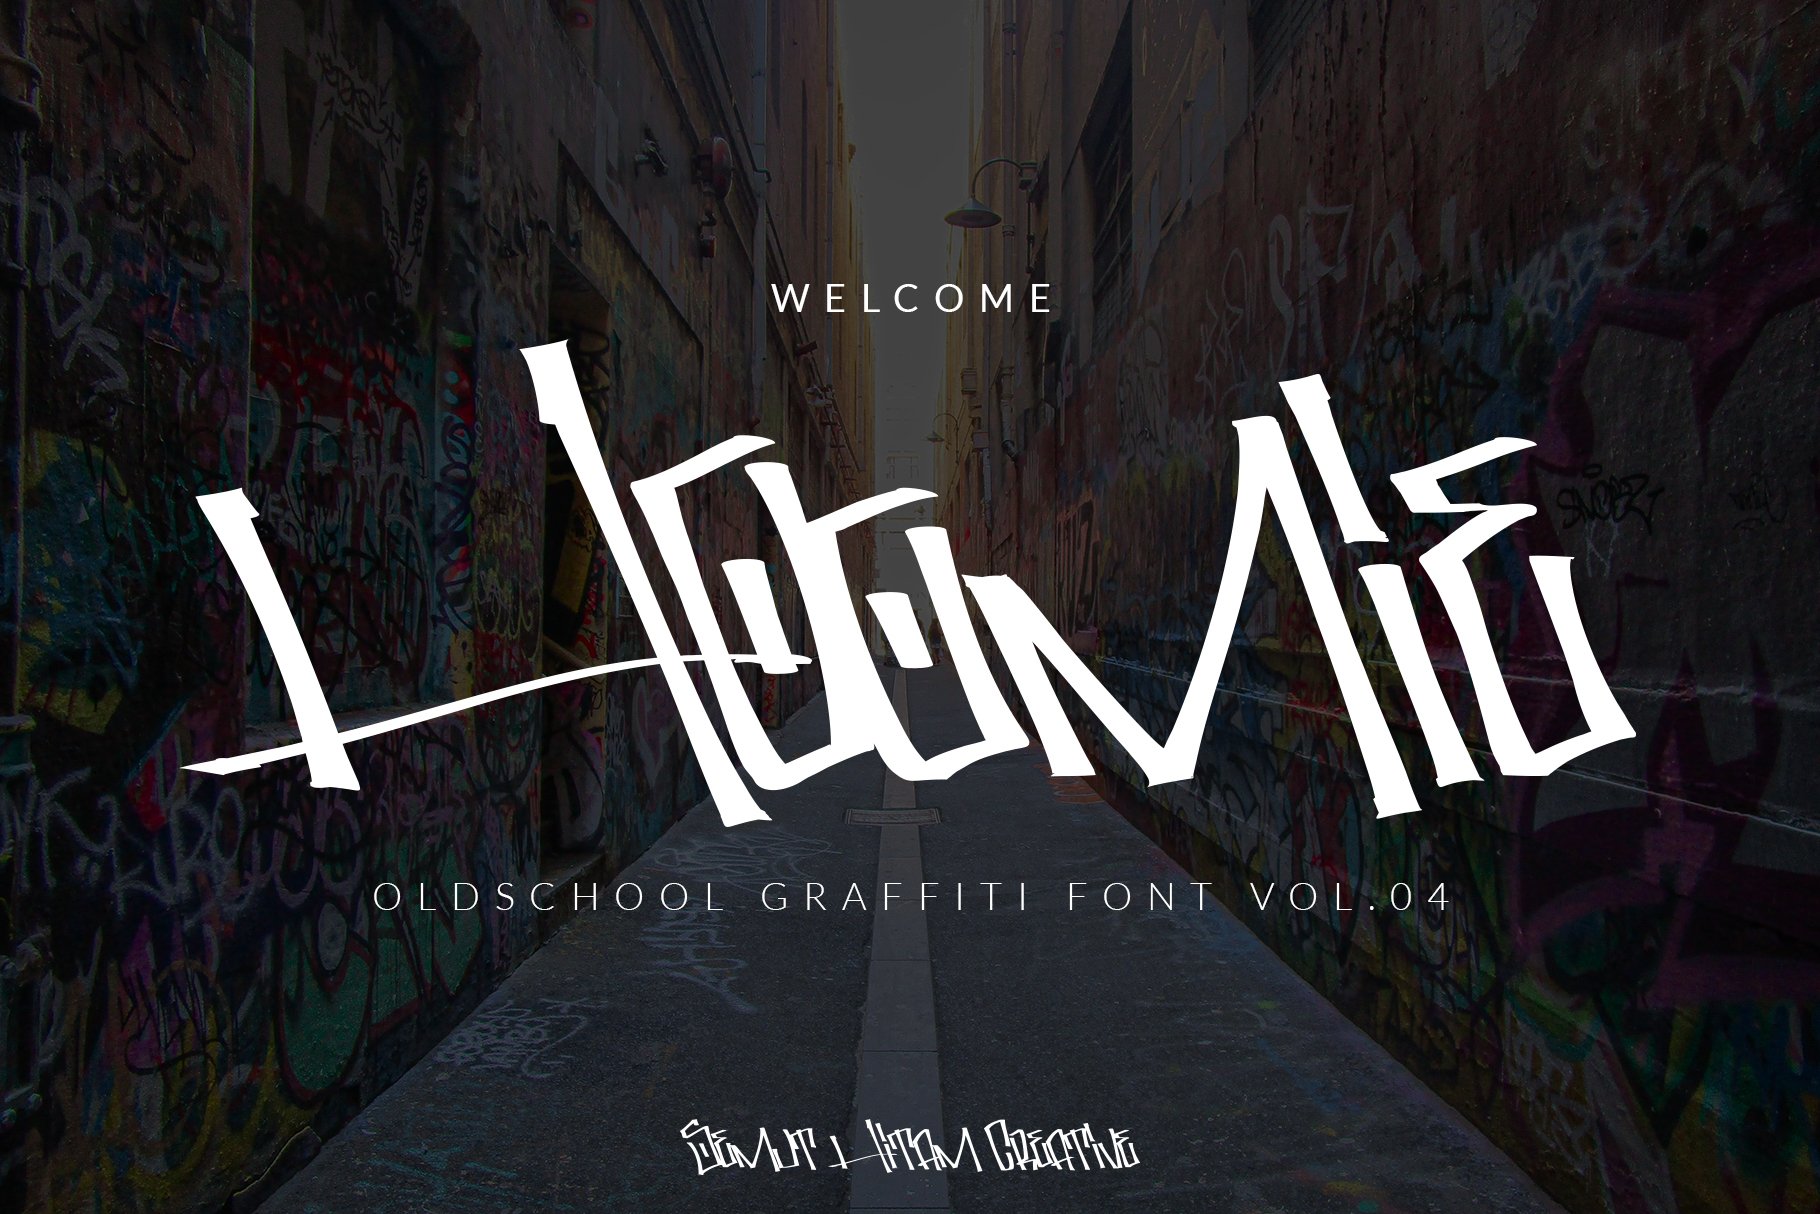 Hoomie - Graffiti Font Vol.04 cover image.